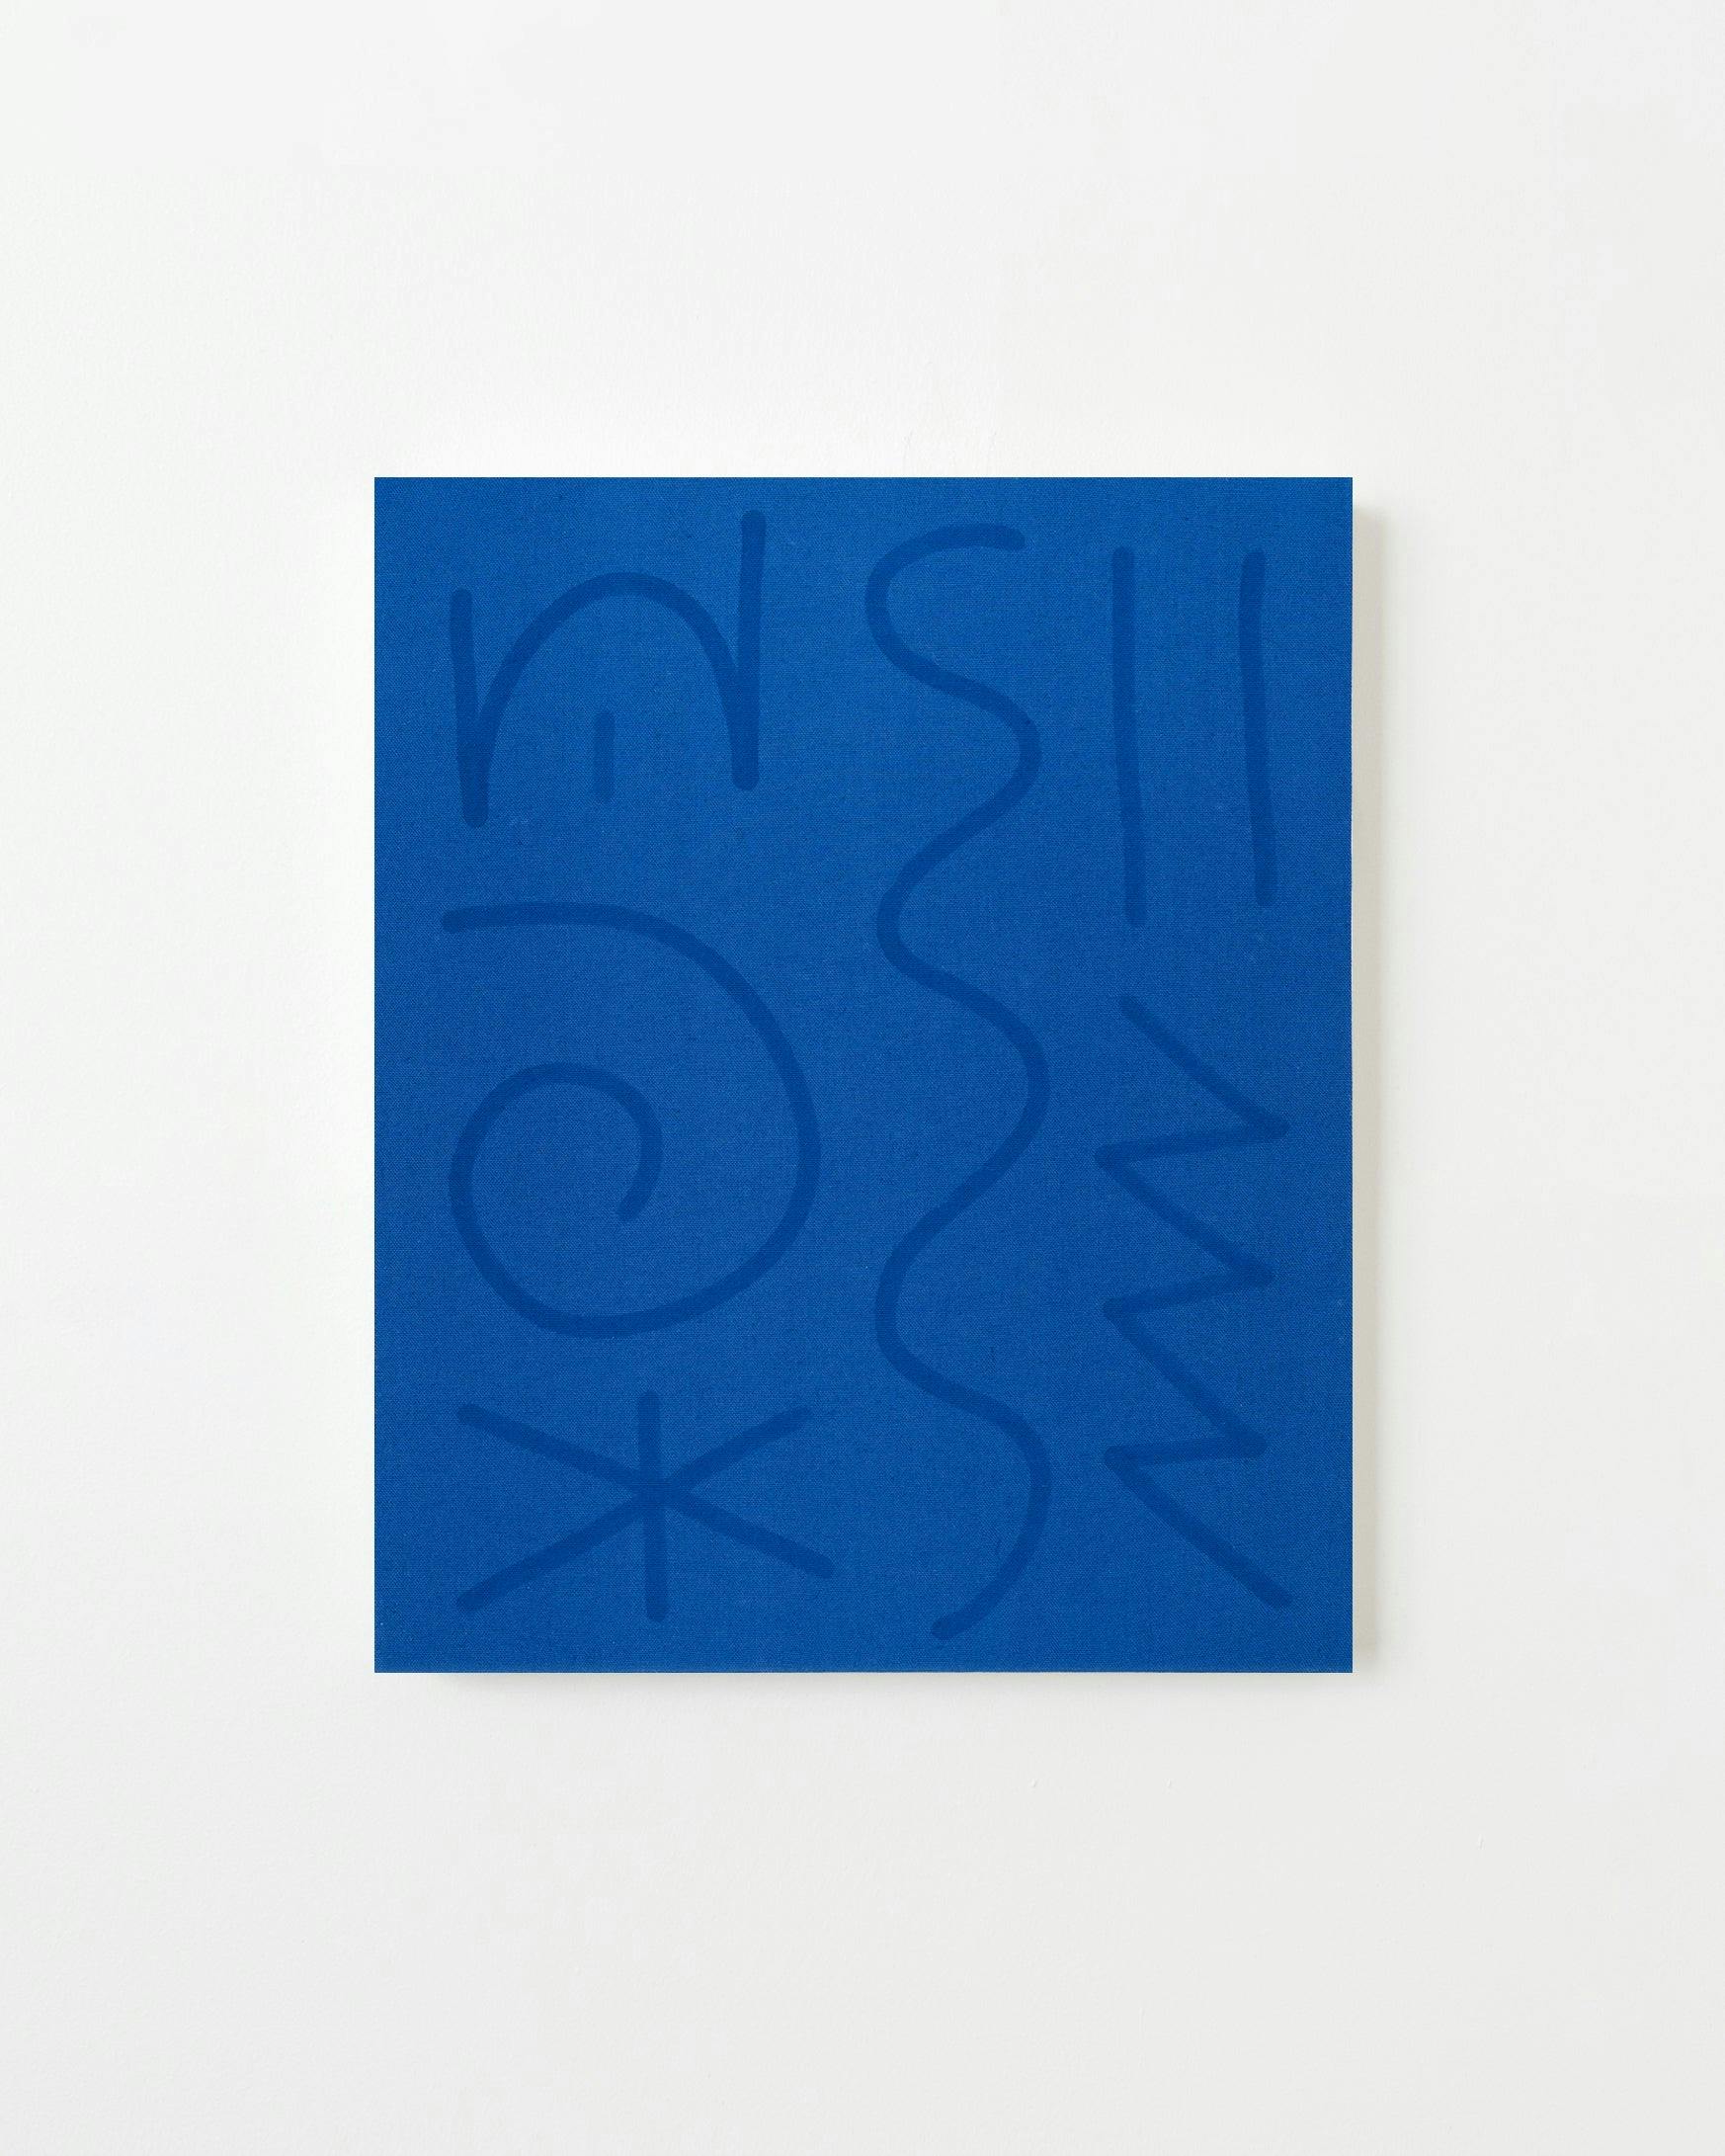 Painting by Chad Kouri titled "Jazz Movement Study (Monochromatic Blue)".